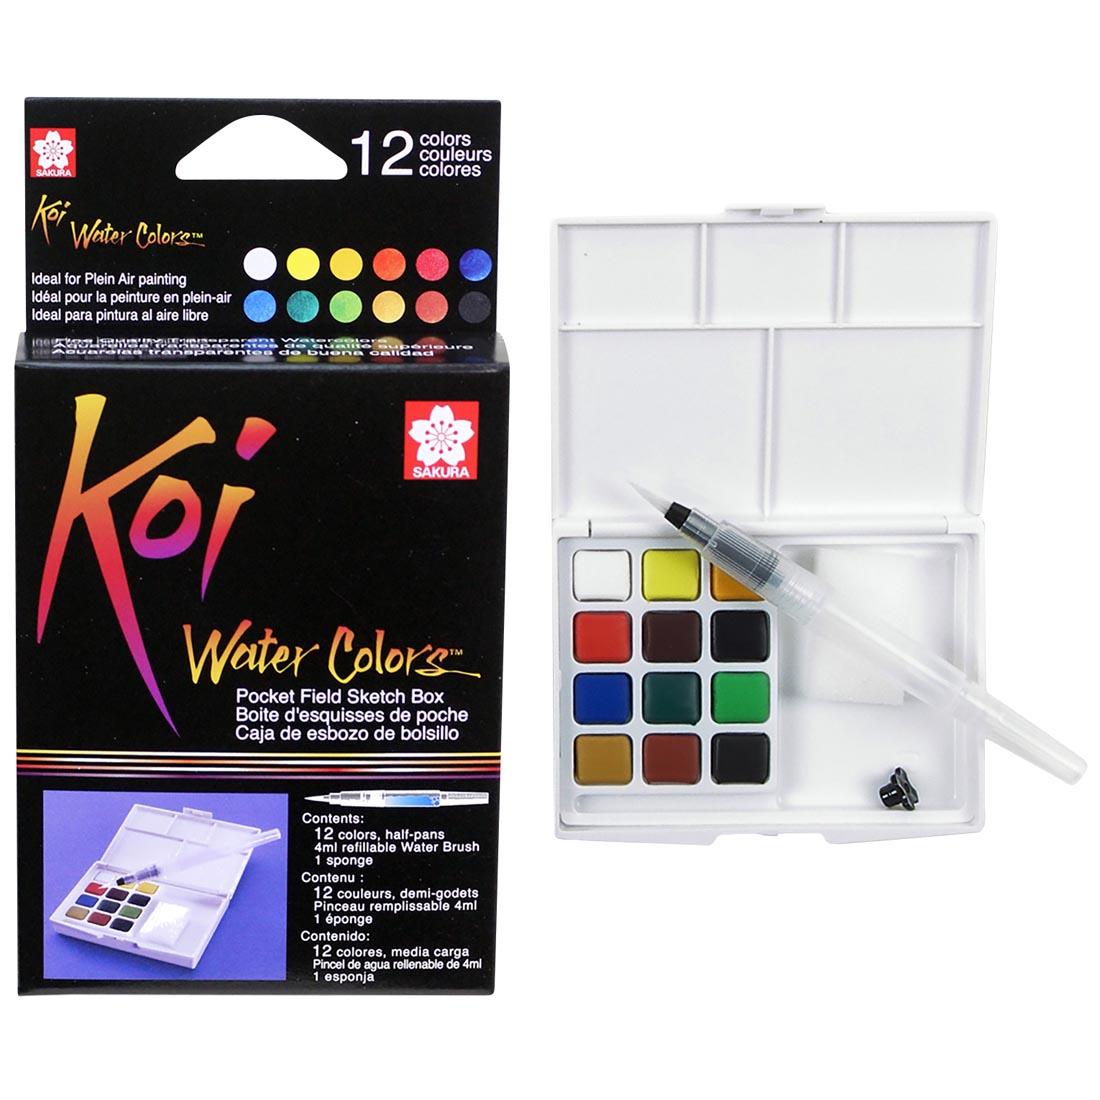 Sakura Koi Water Colors Pocket Field Sketch Box 12-Color Set shown open beside its package